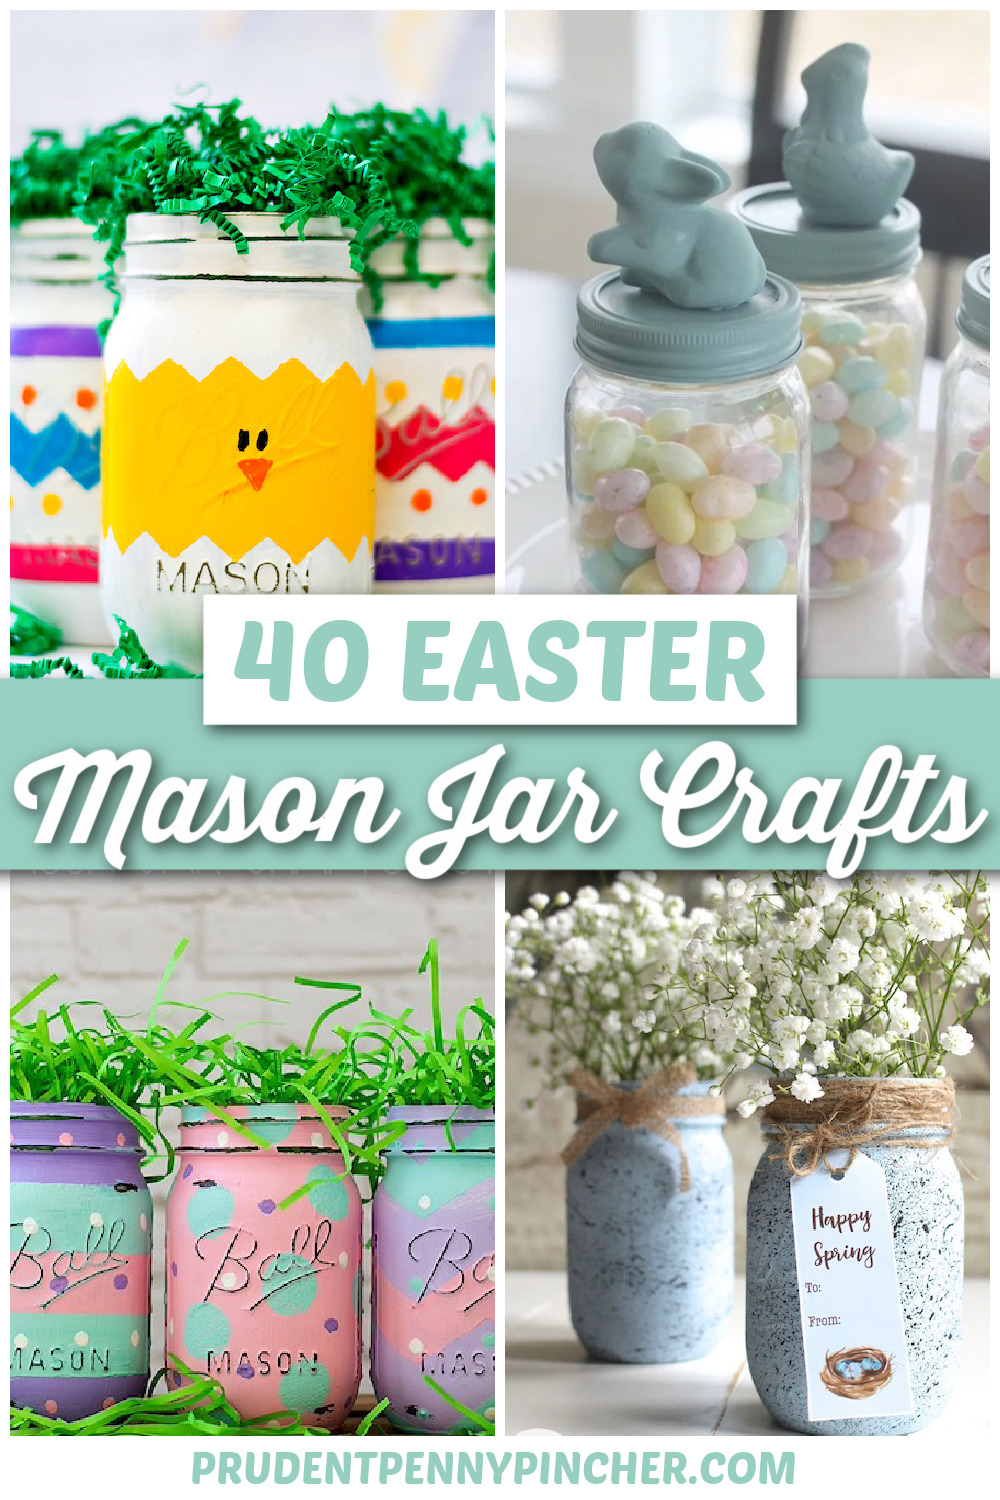 30 Fun Mason Jar Crafts for Your Home